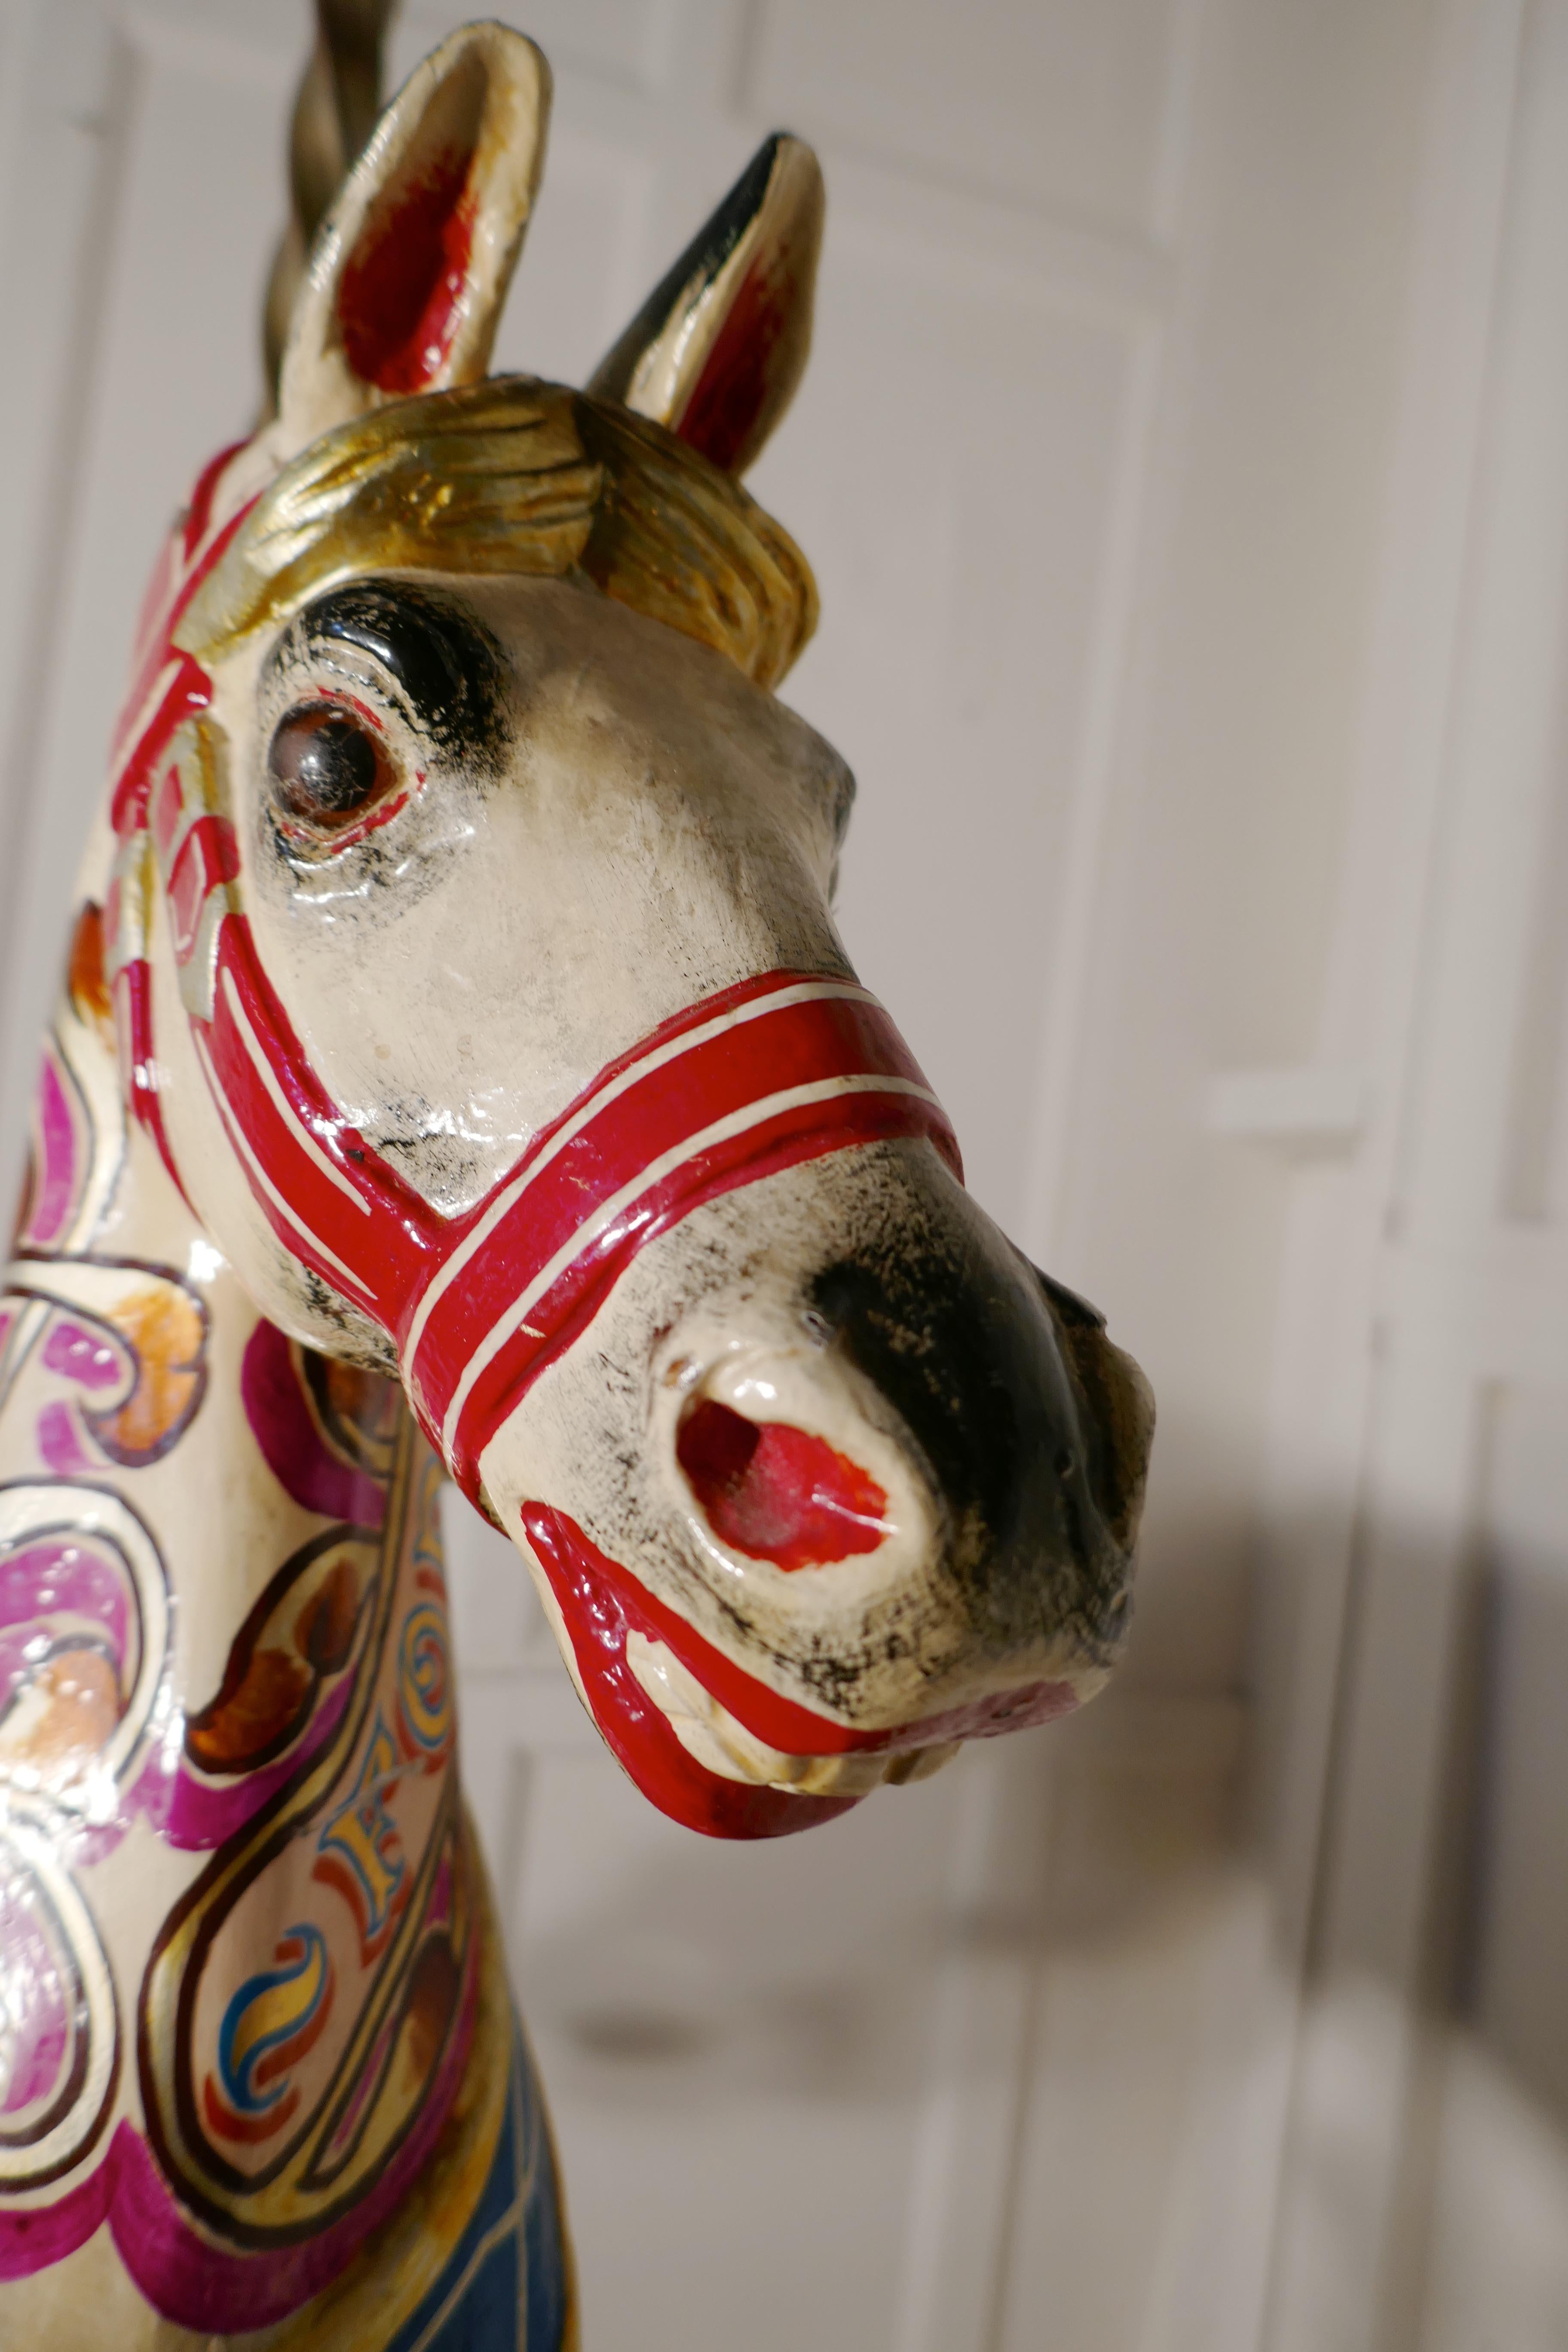 Folk Art Small 19th Century Painted Wooden Carousel Galloper or Fair Ground Horse